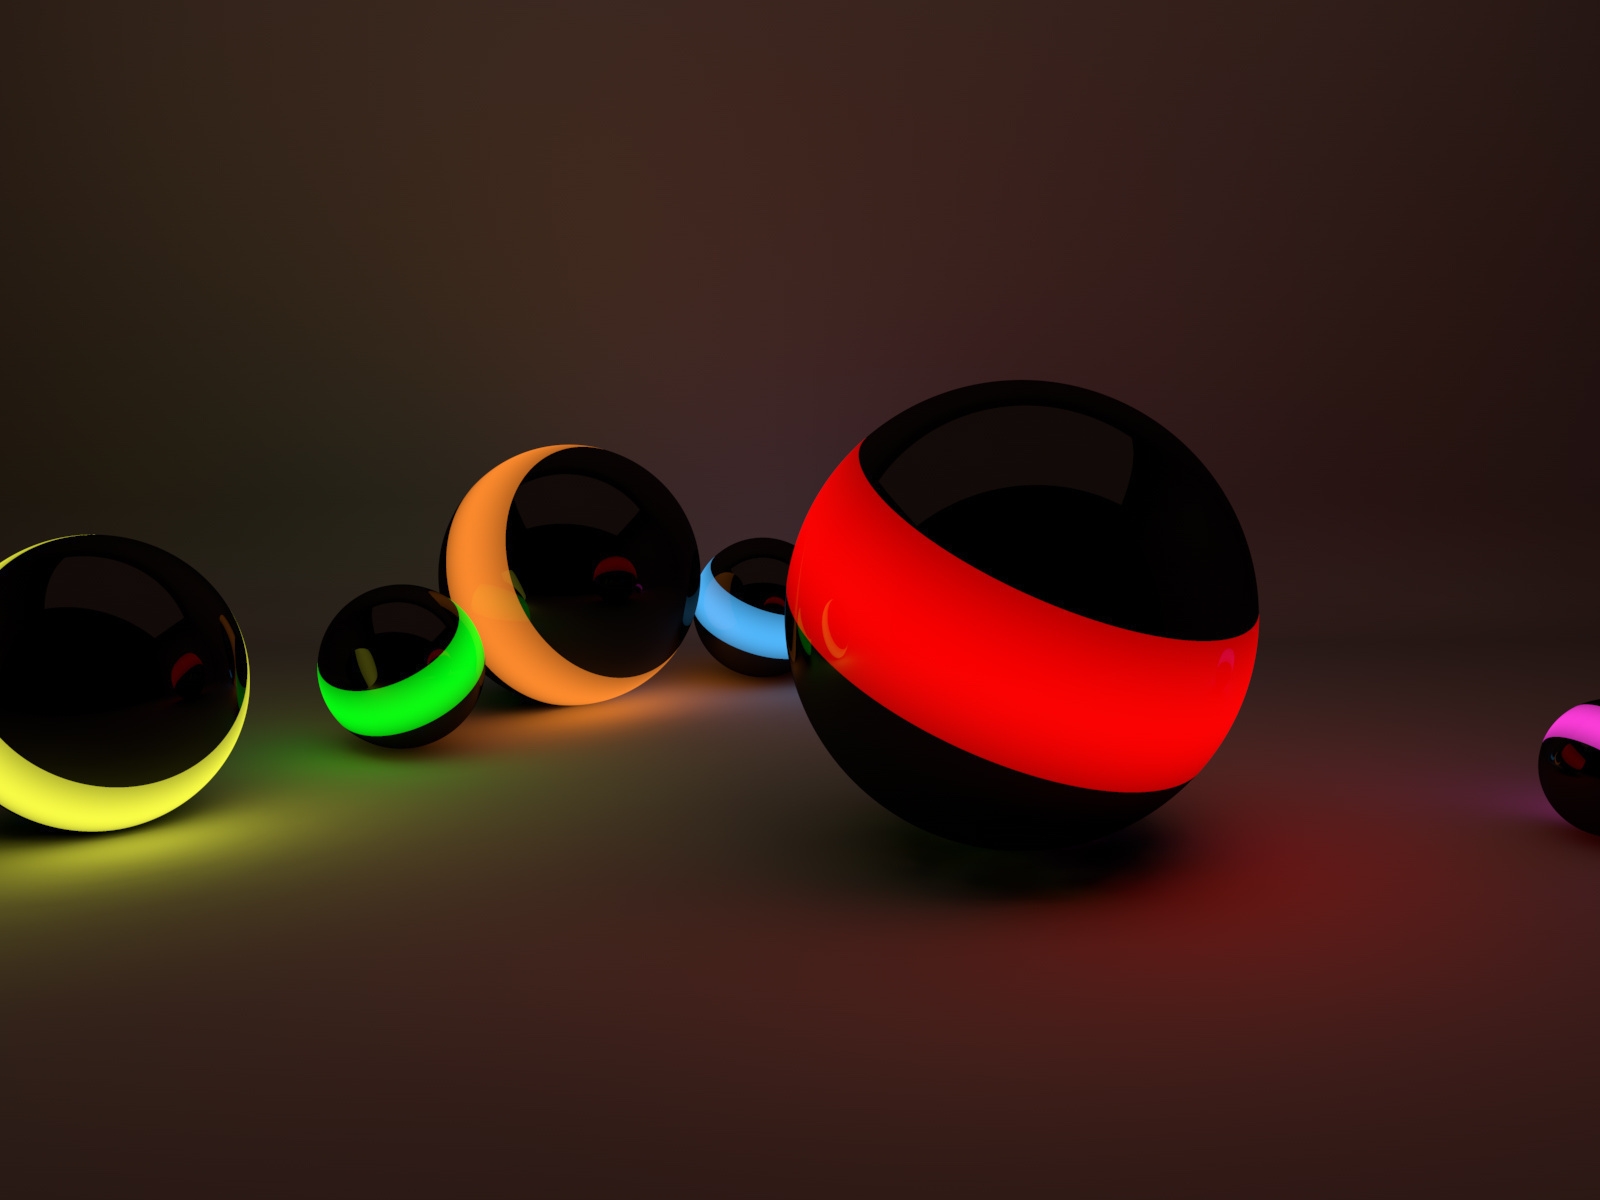 Balls Lights for 1600 x 1200 resolution